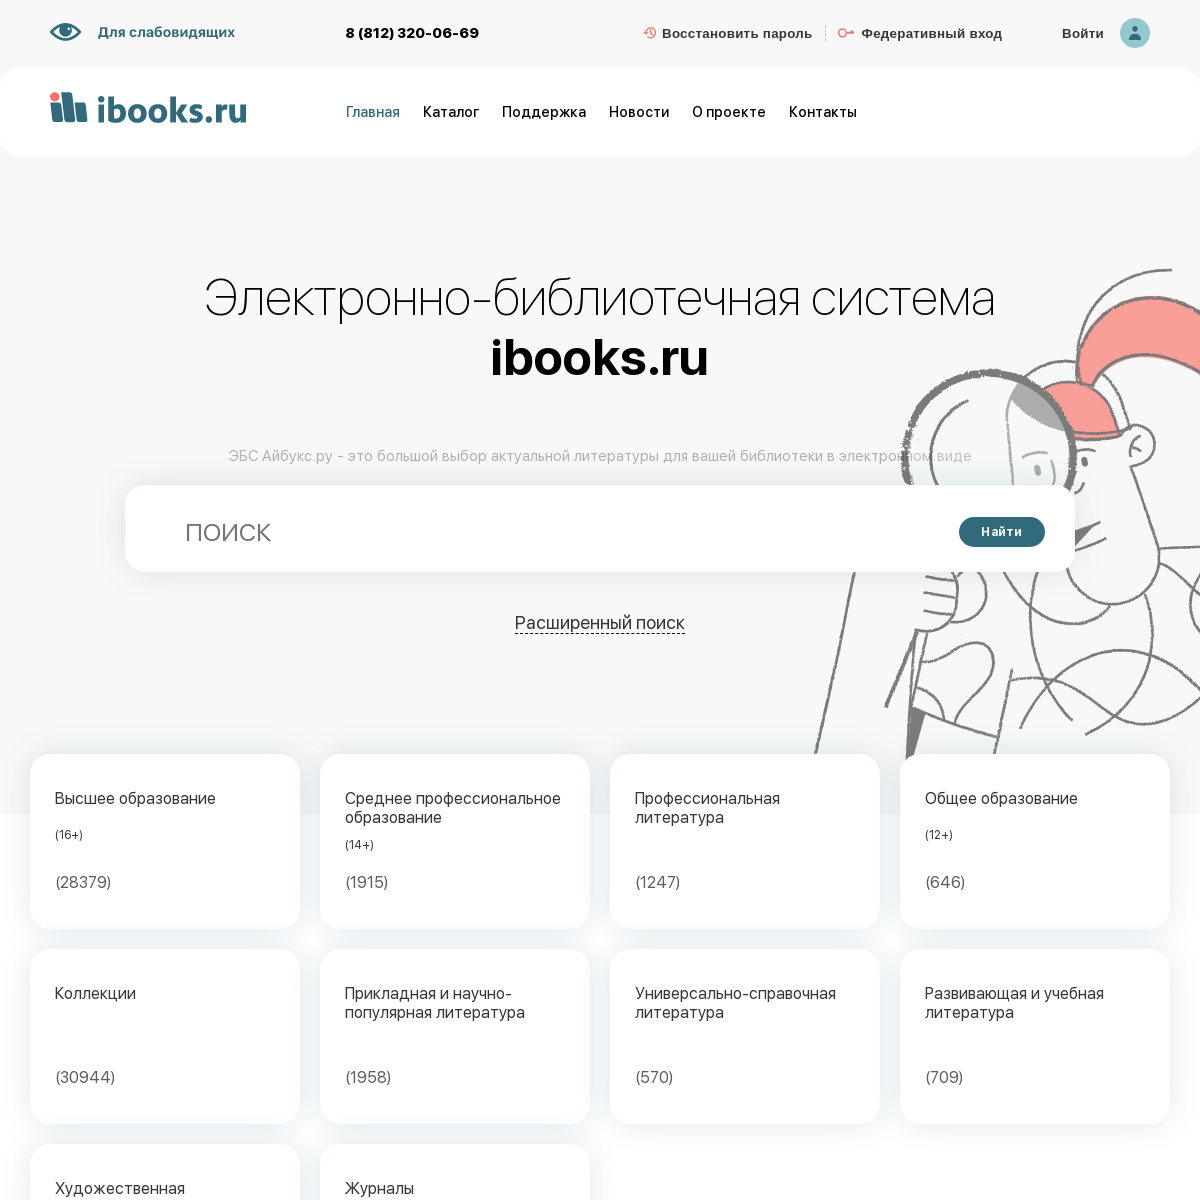 A complete backup of ibooks.ru